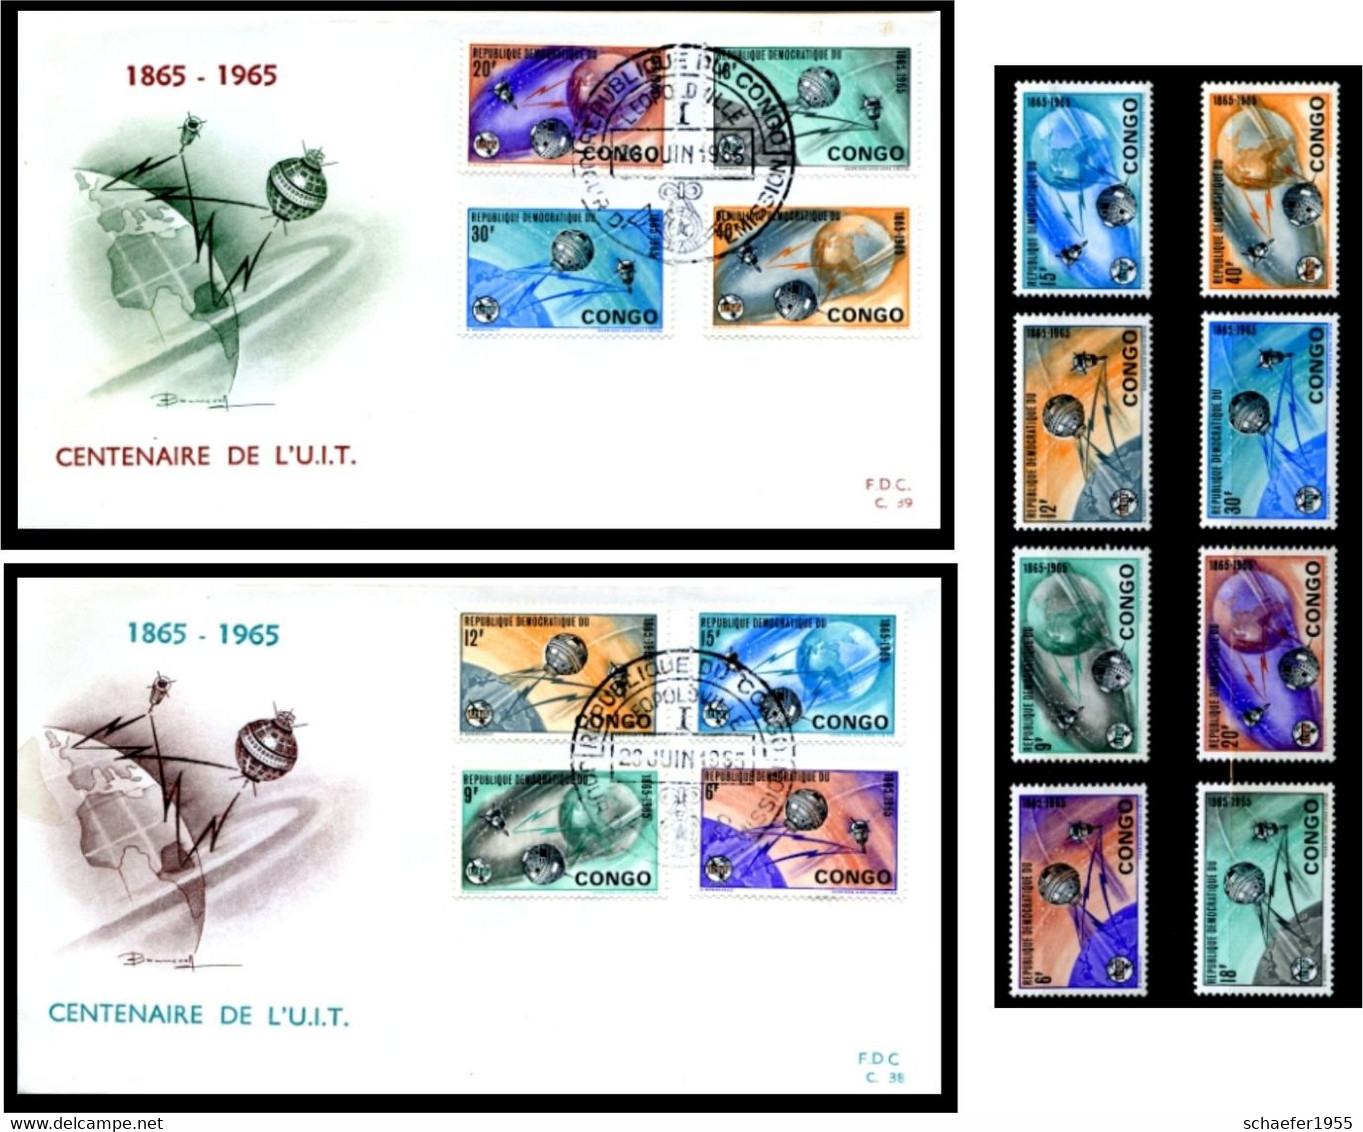 Kongo, Congo 1965 2x FDC + Stamps UIT - Africa